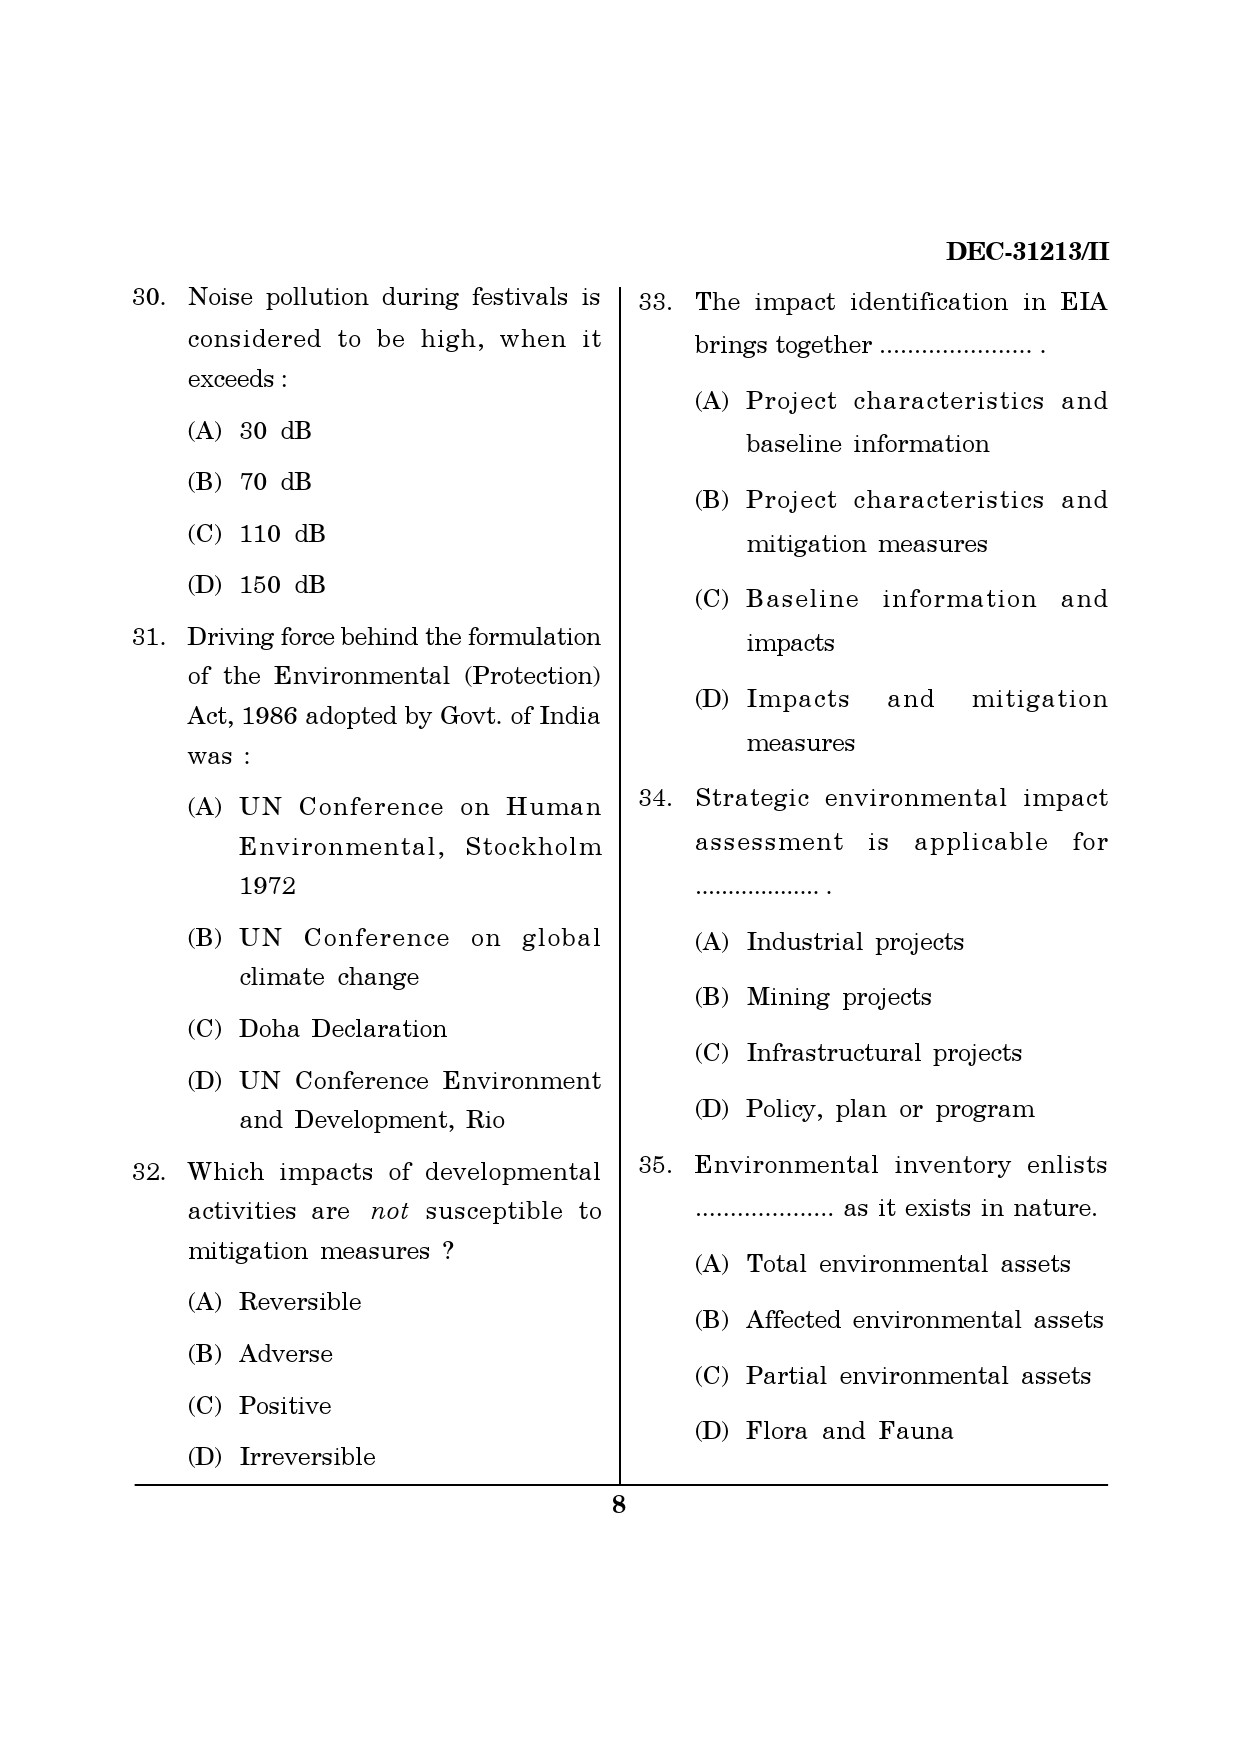 Maharashtra SET Environmental Sciences Question Paper II December 2013 7